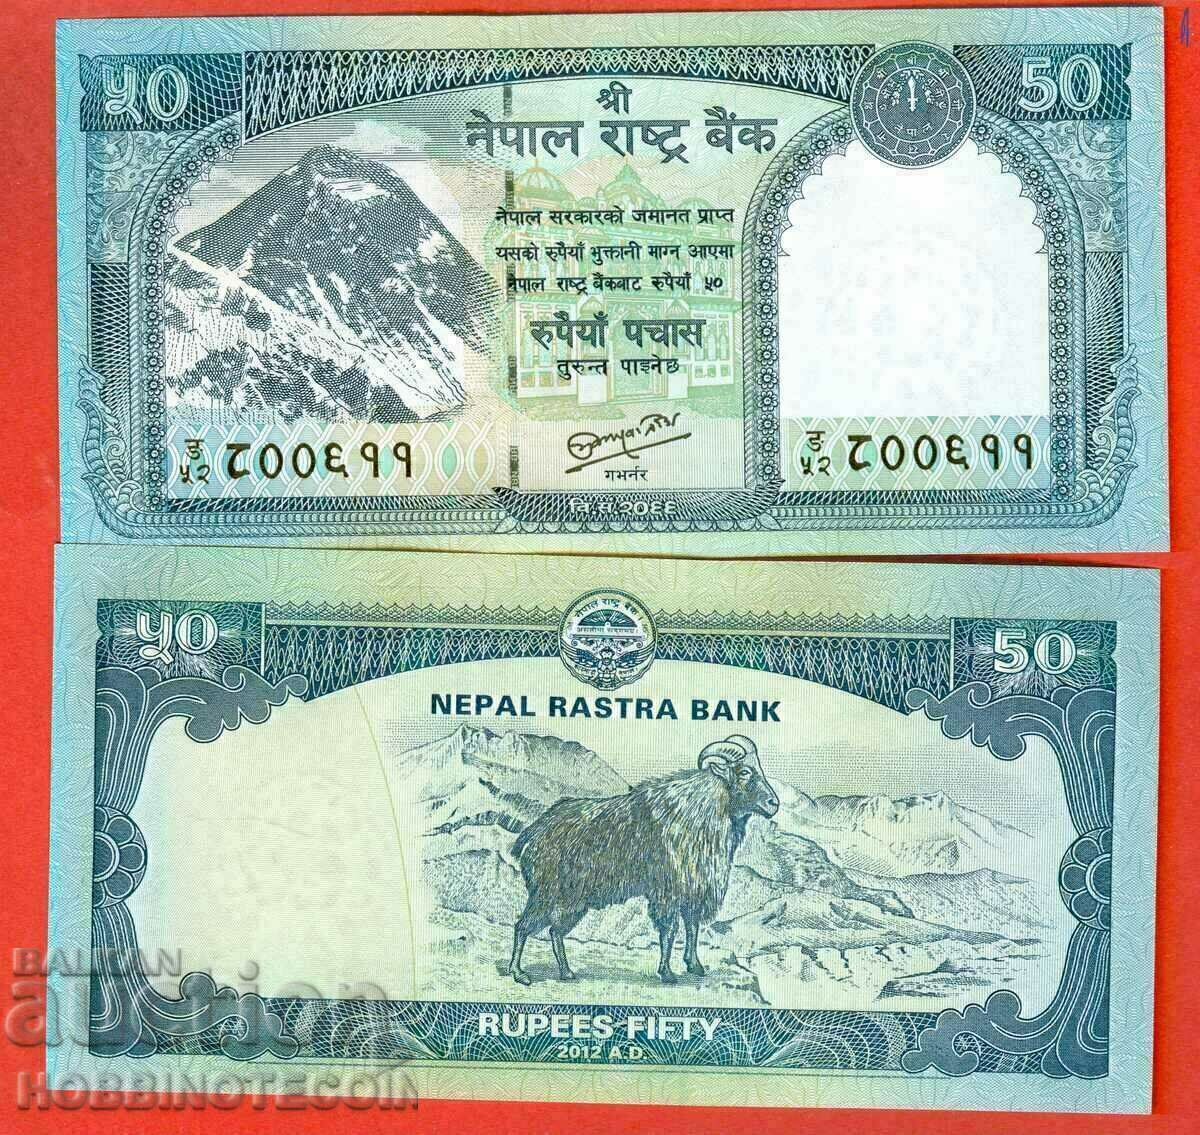 NEPAL NEPAL Έκδοση 50 ρουπιών 2012 NEW UNC OLD BACK